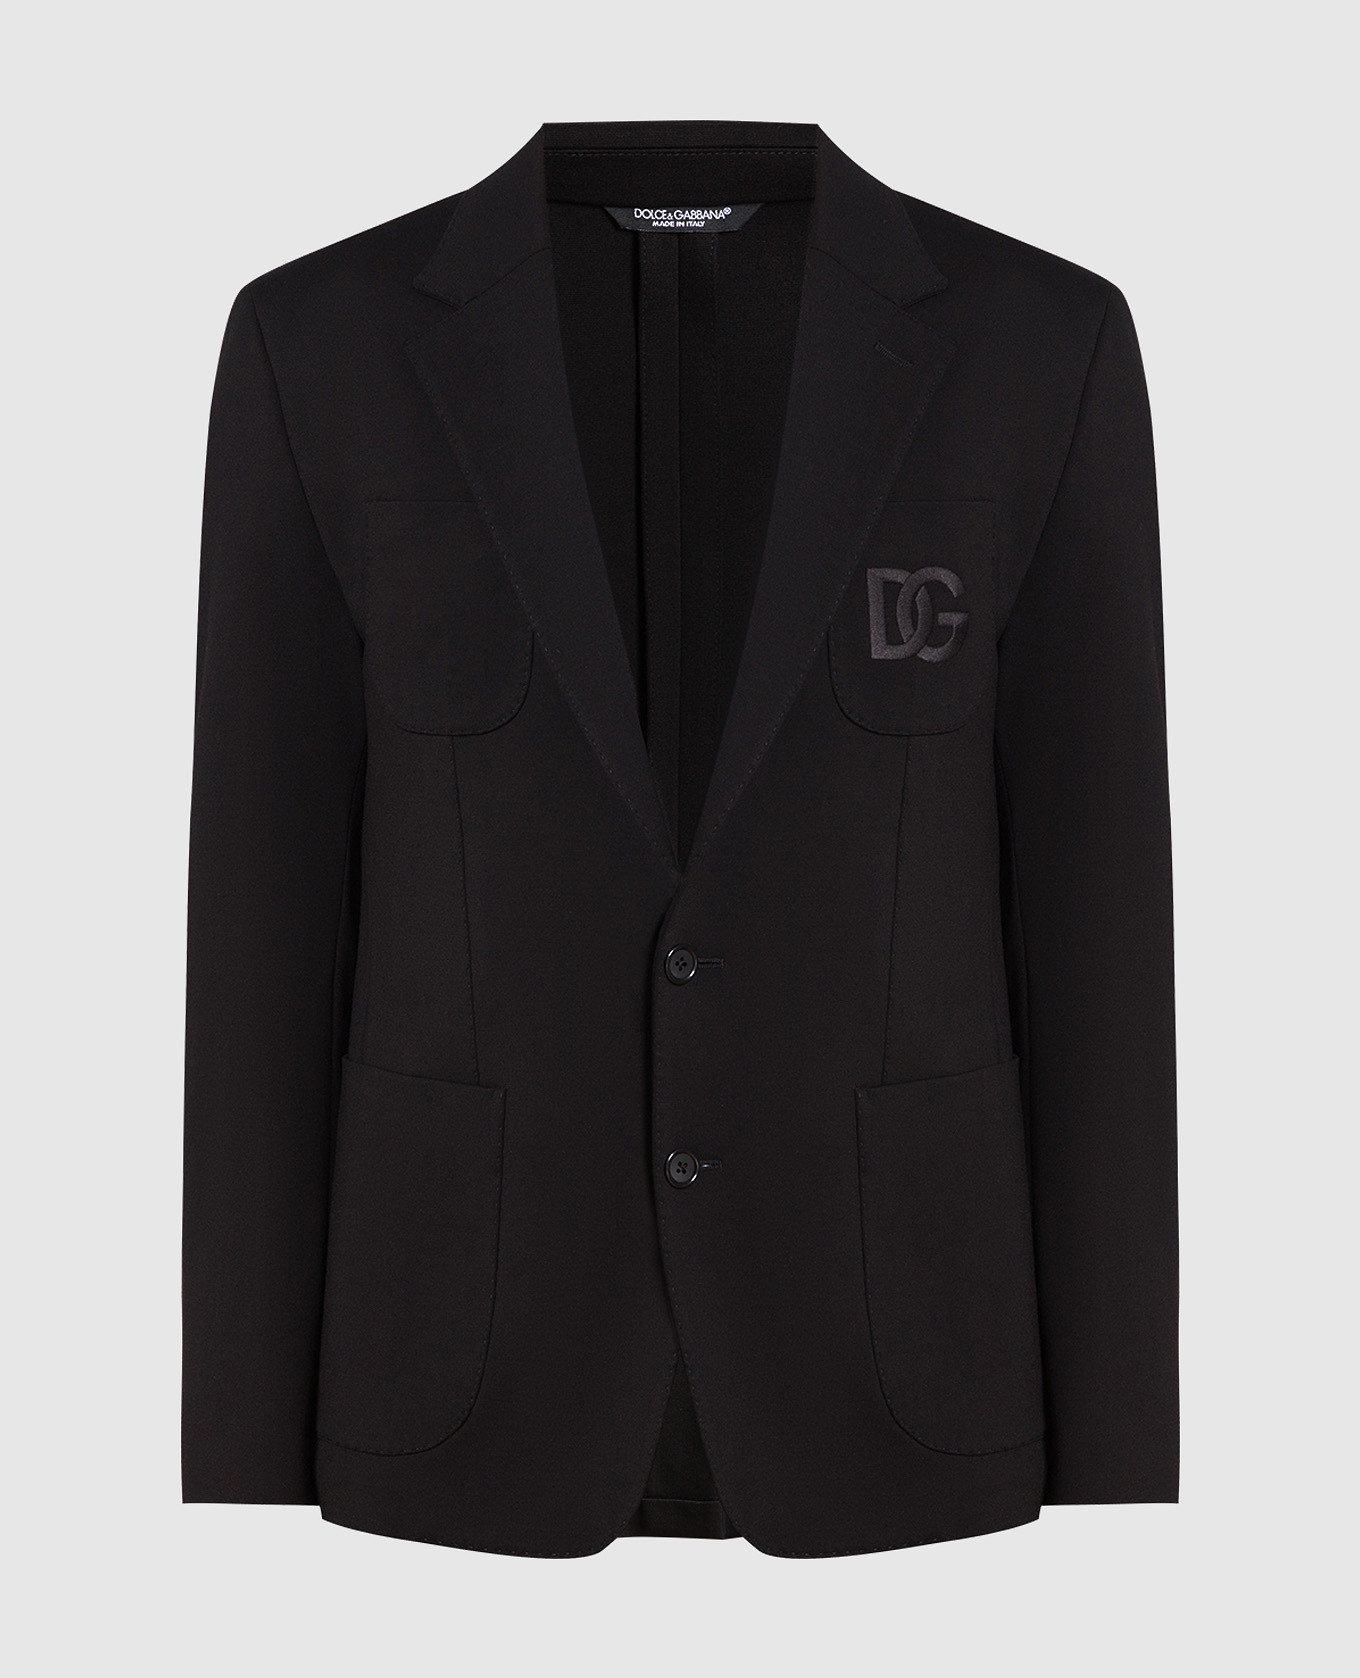 Black blazer with DG logo embroidery